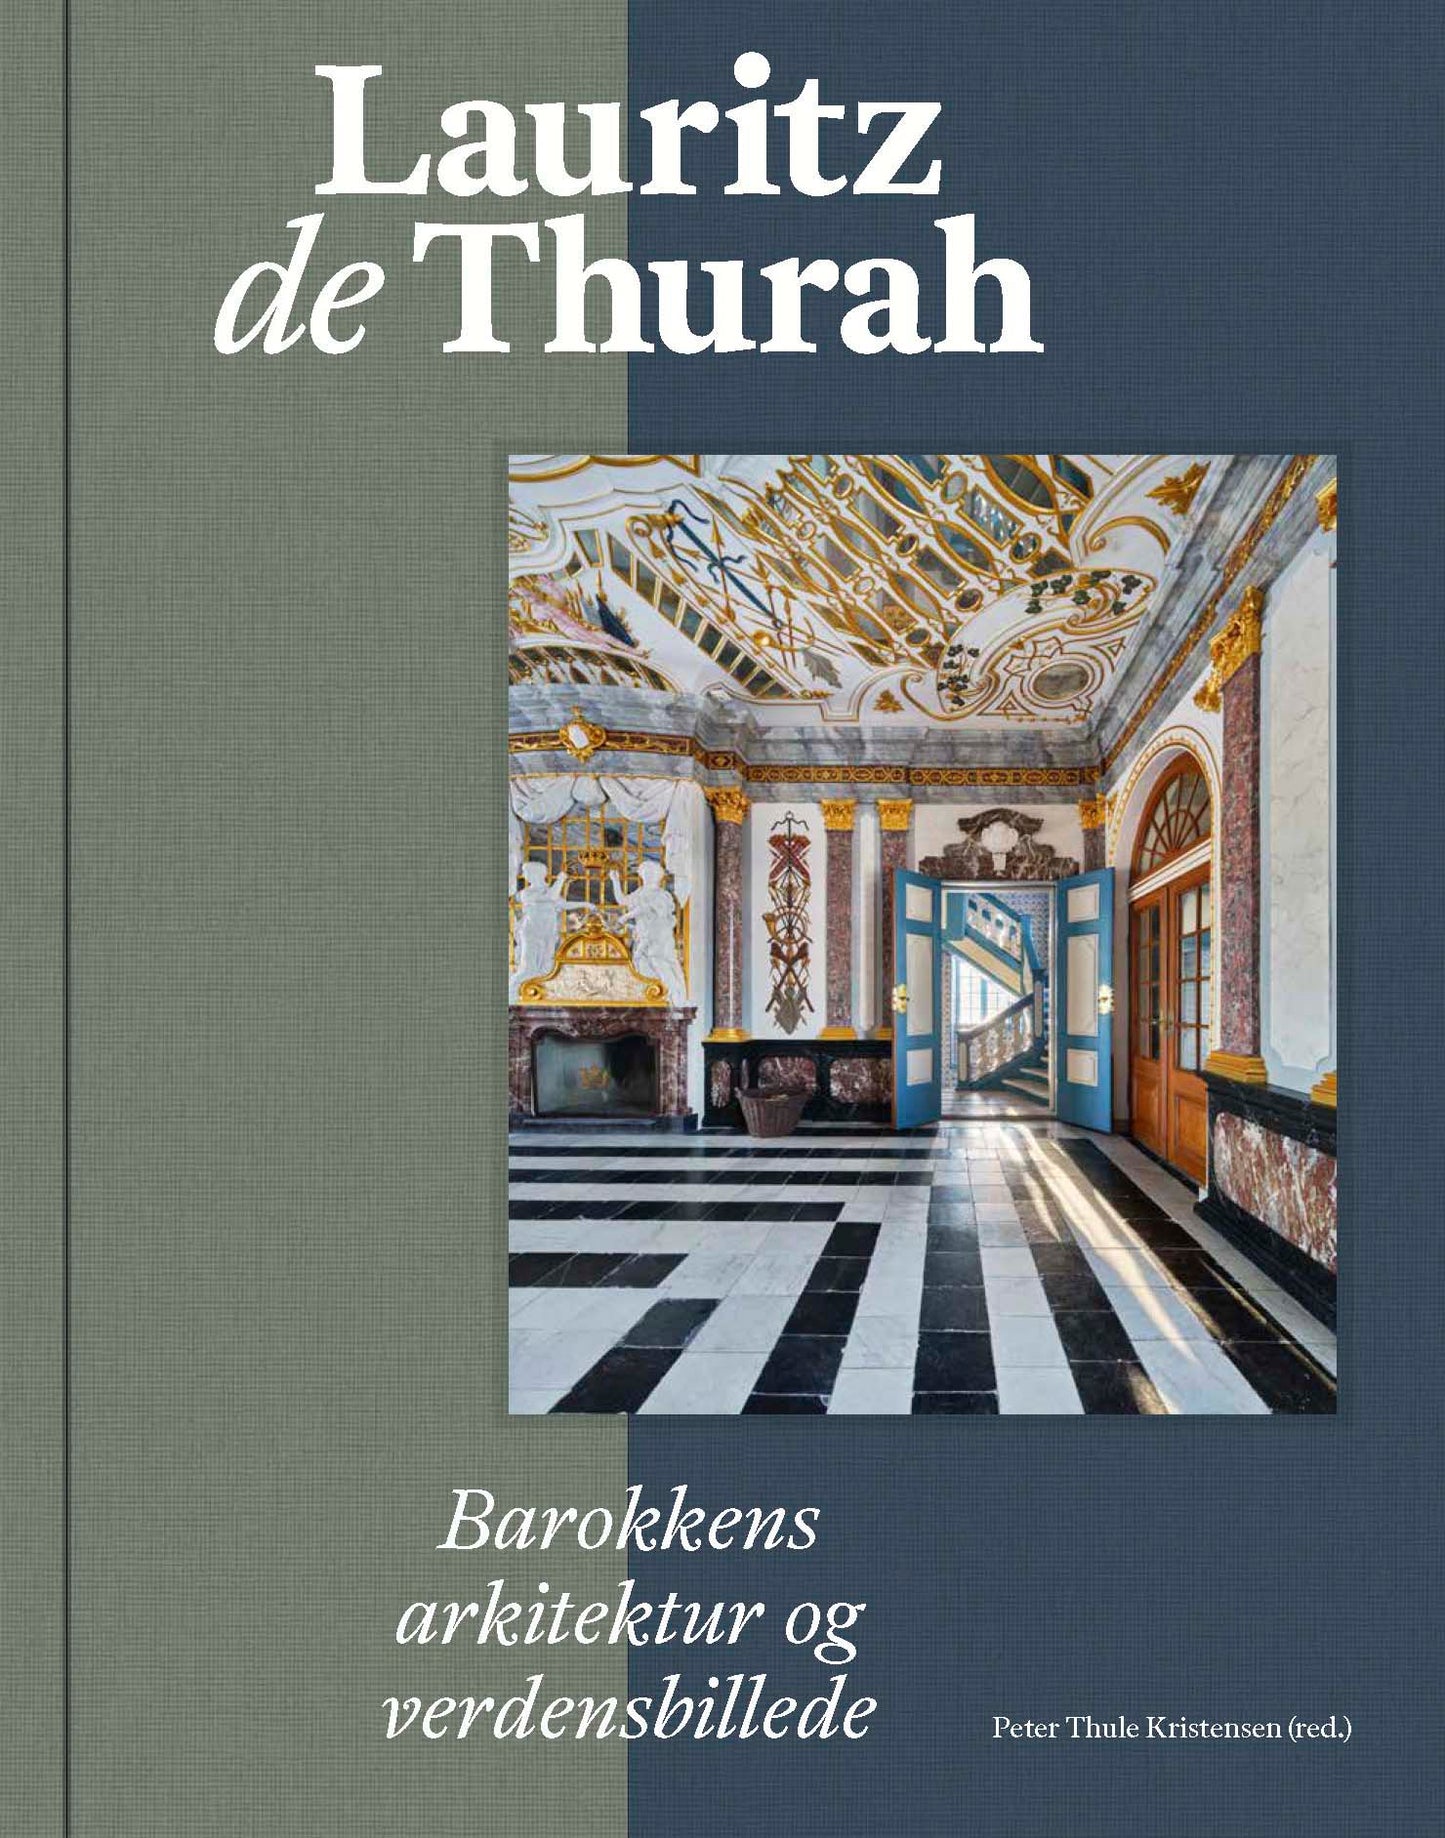 Lauritz de Thurah – Barokkens arkitektur og verdensbillede